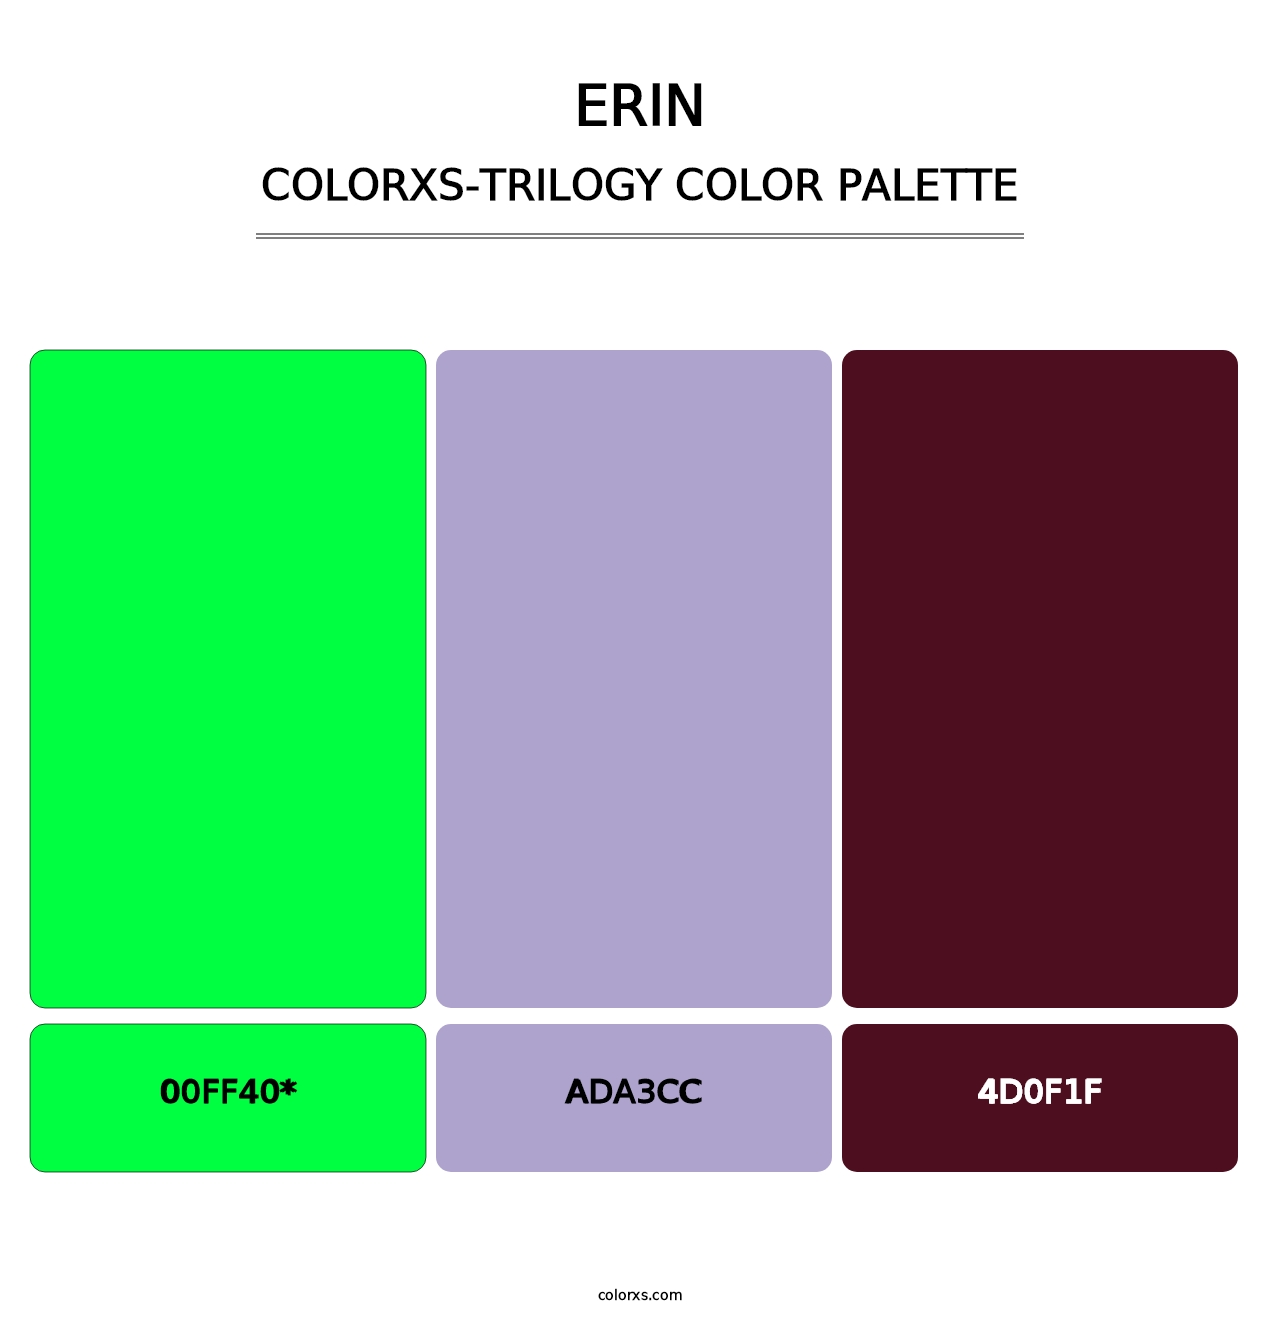 Erin - Colorxs Trilogy Palette